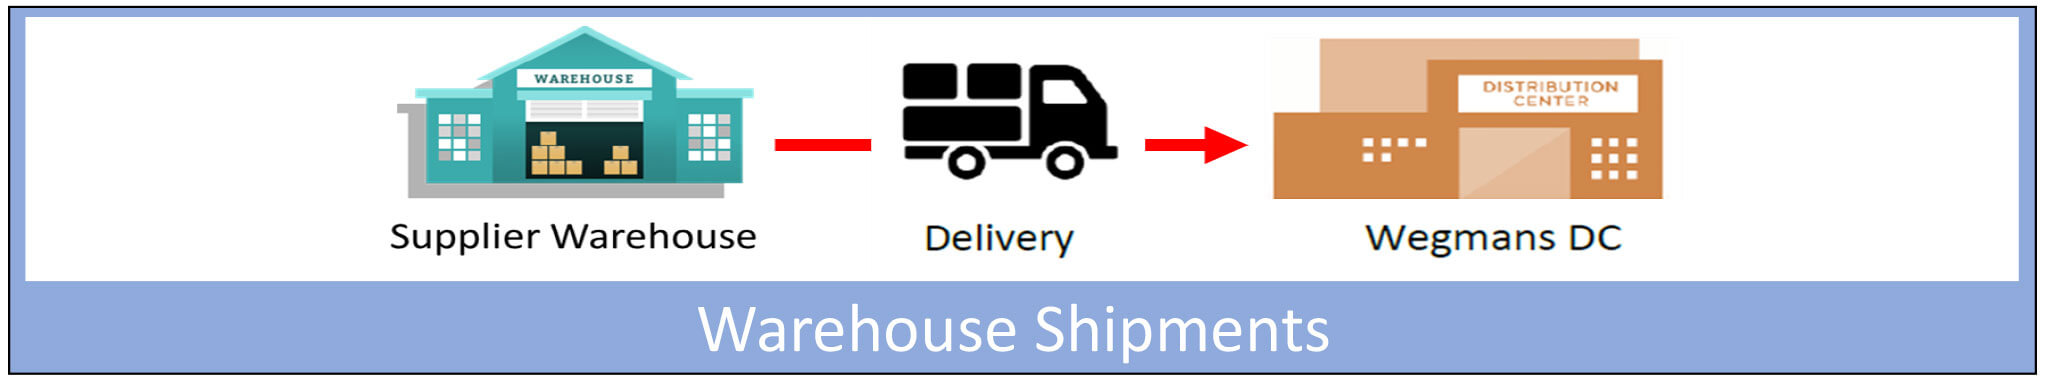 Warehouse Shipments